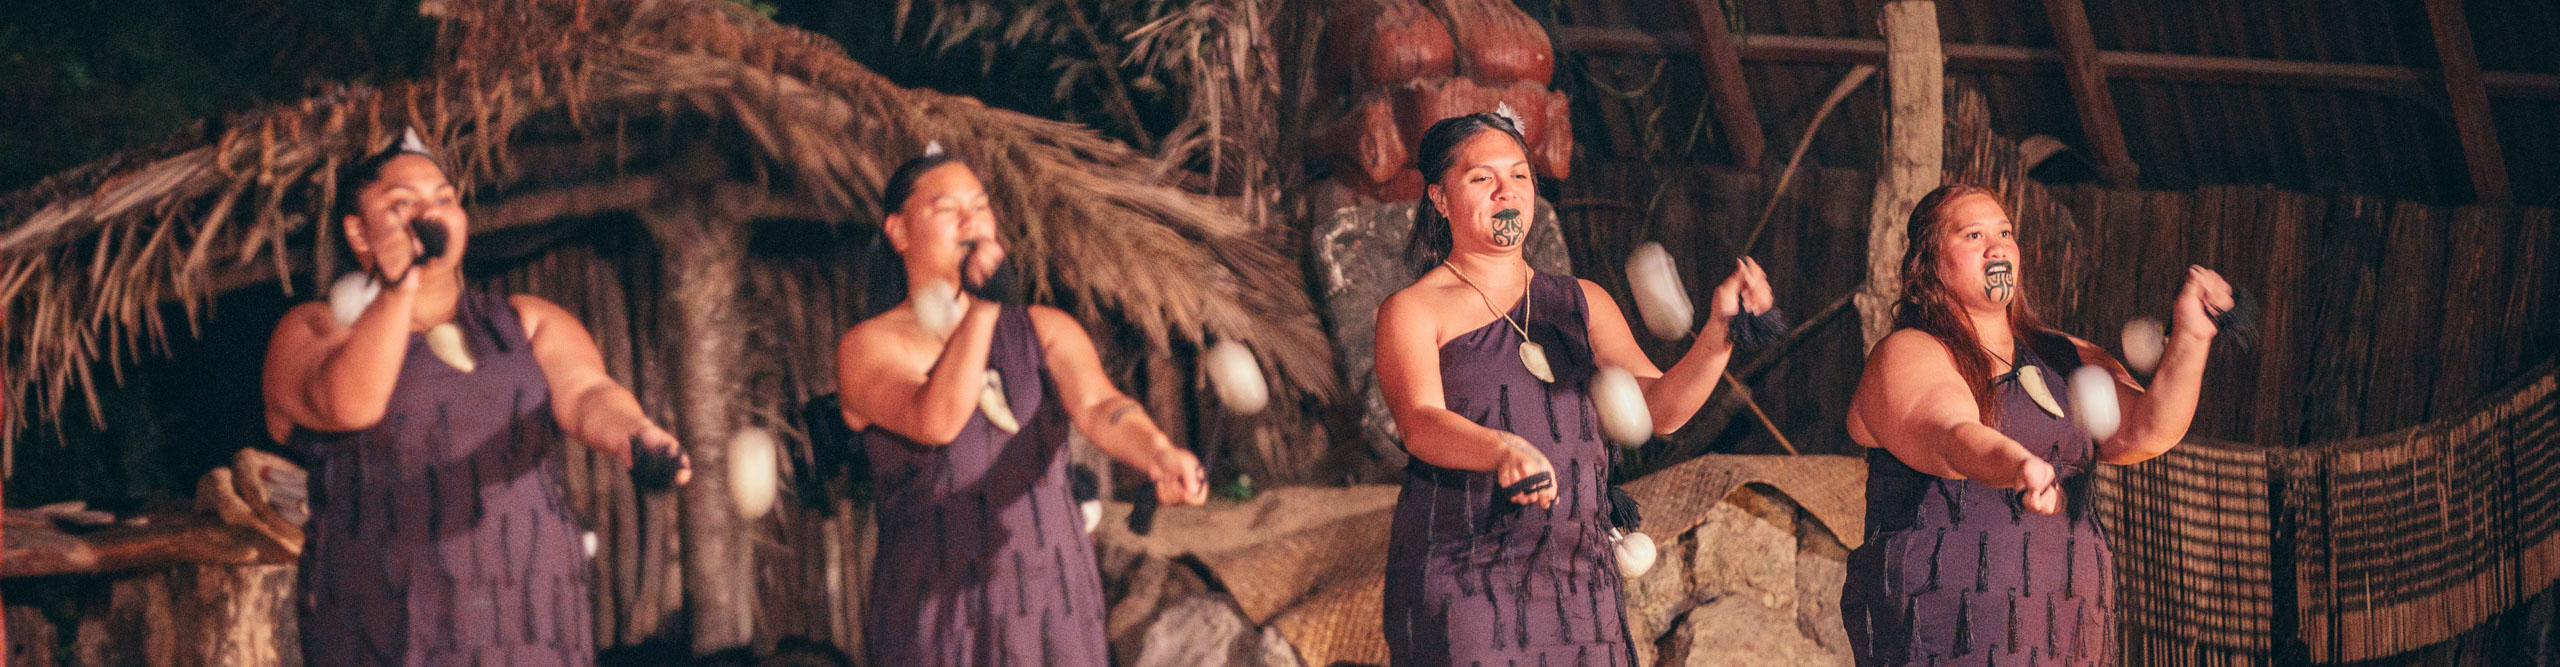 Maori women own stage doing Kapa Haka in Rotorua, New Zealand